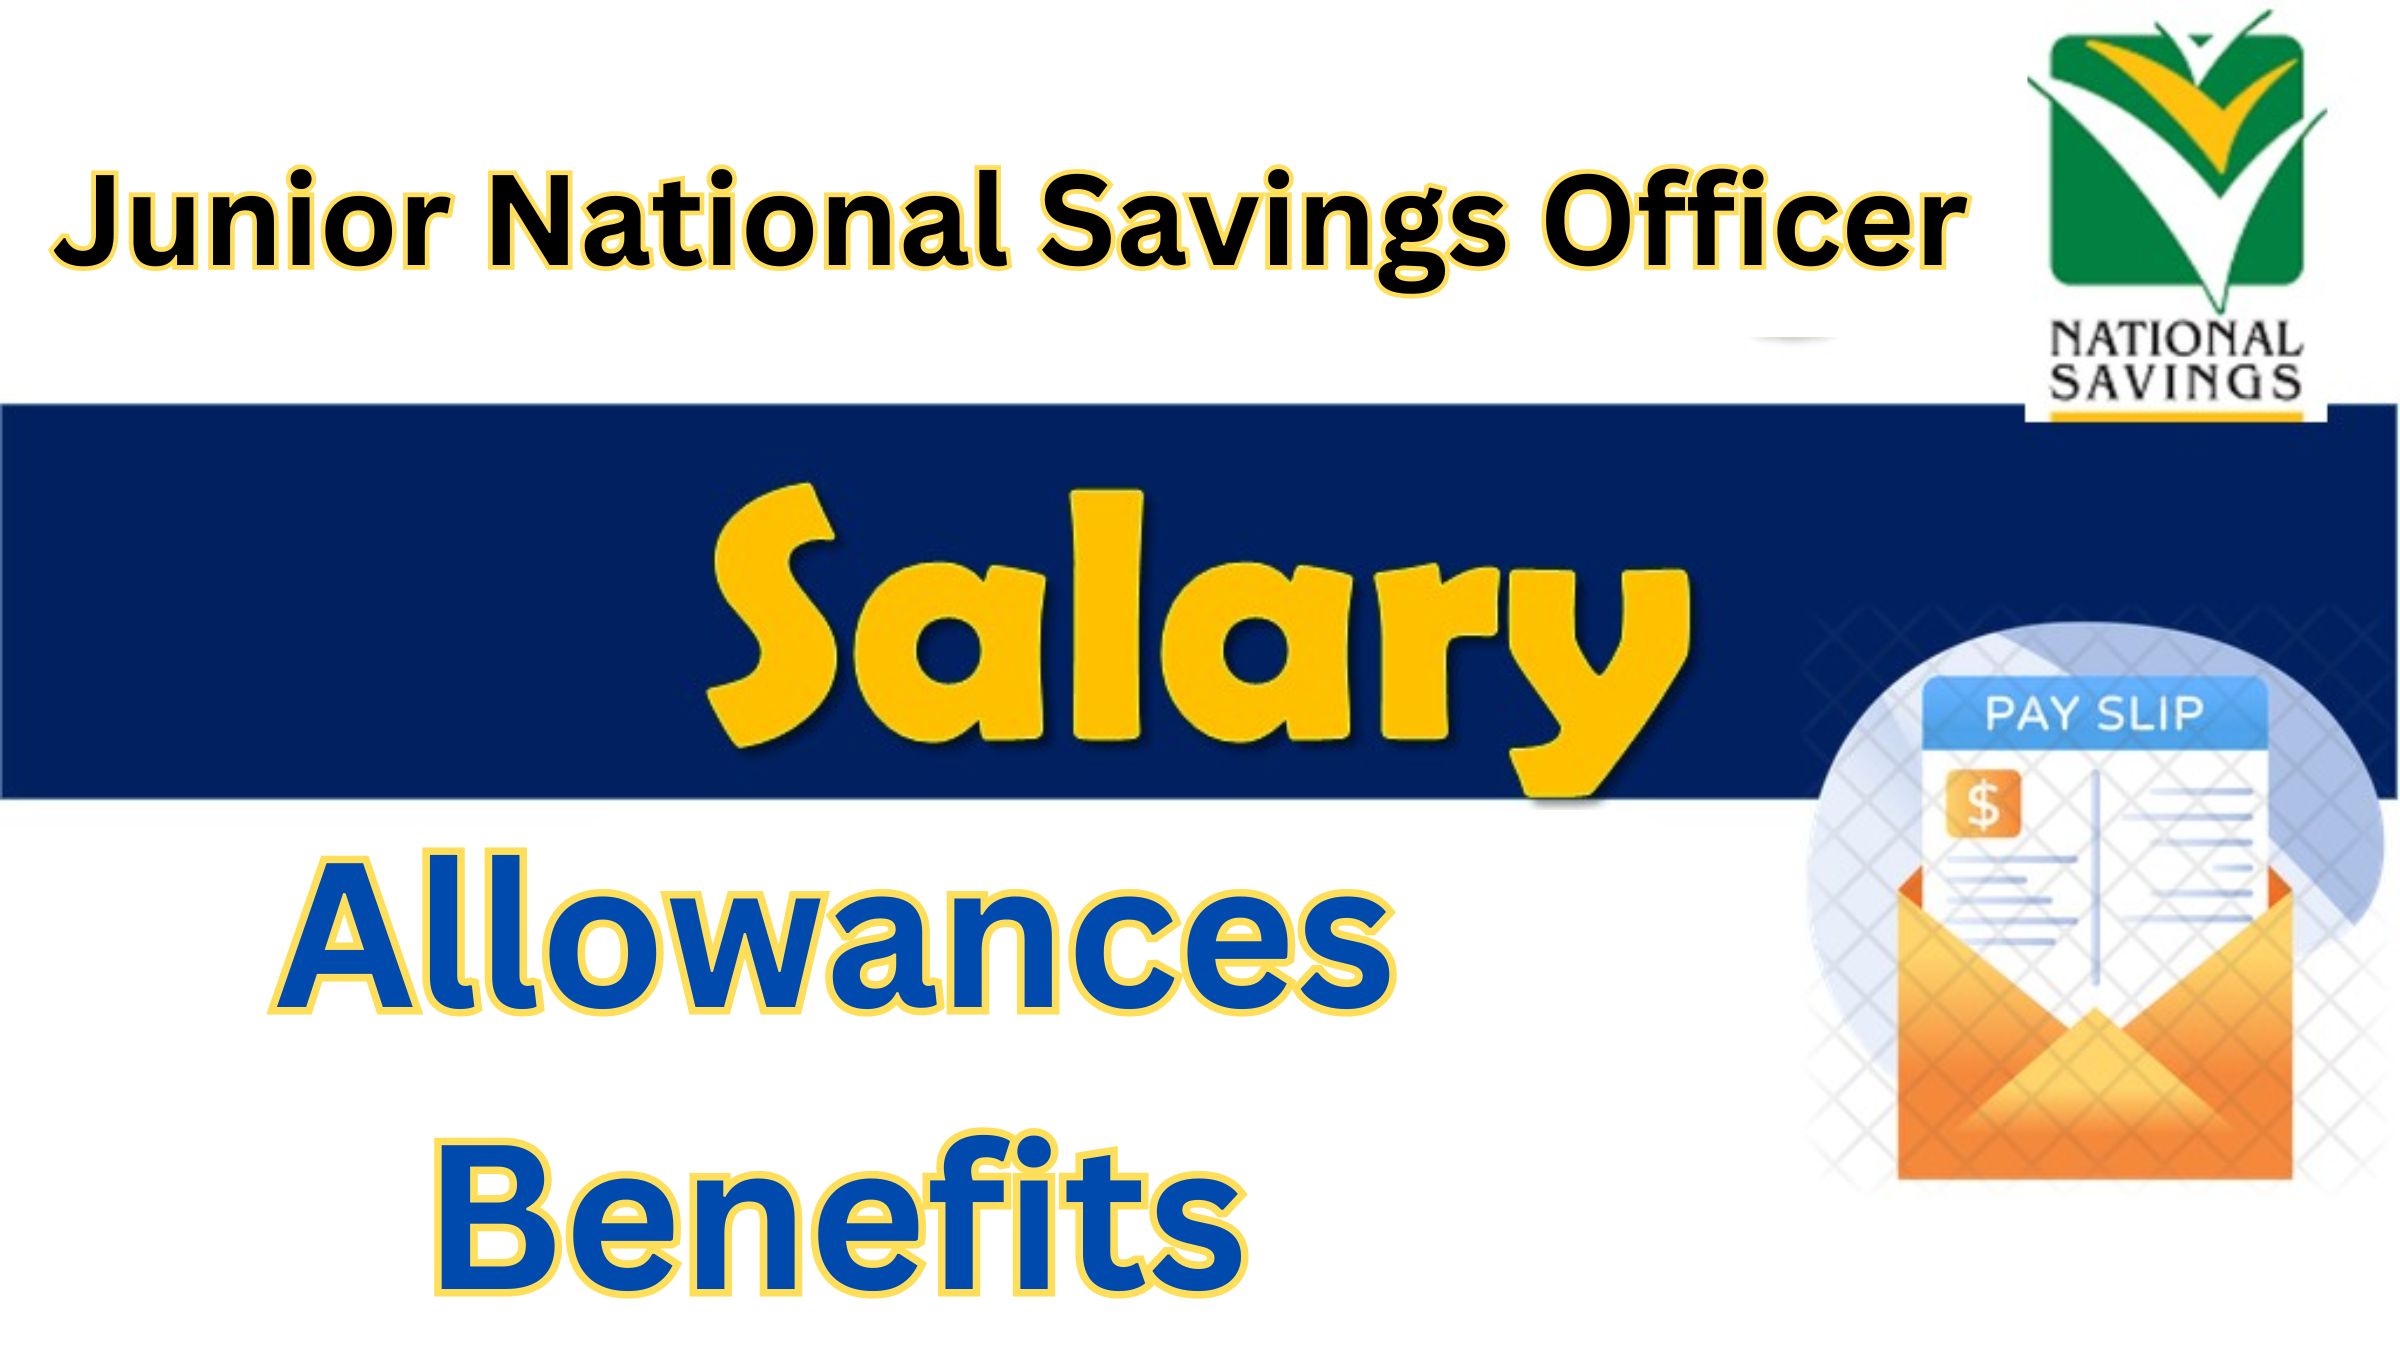 Junior National Savings Officer Salary in Pakistan